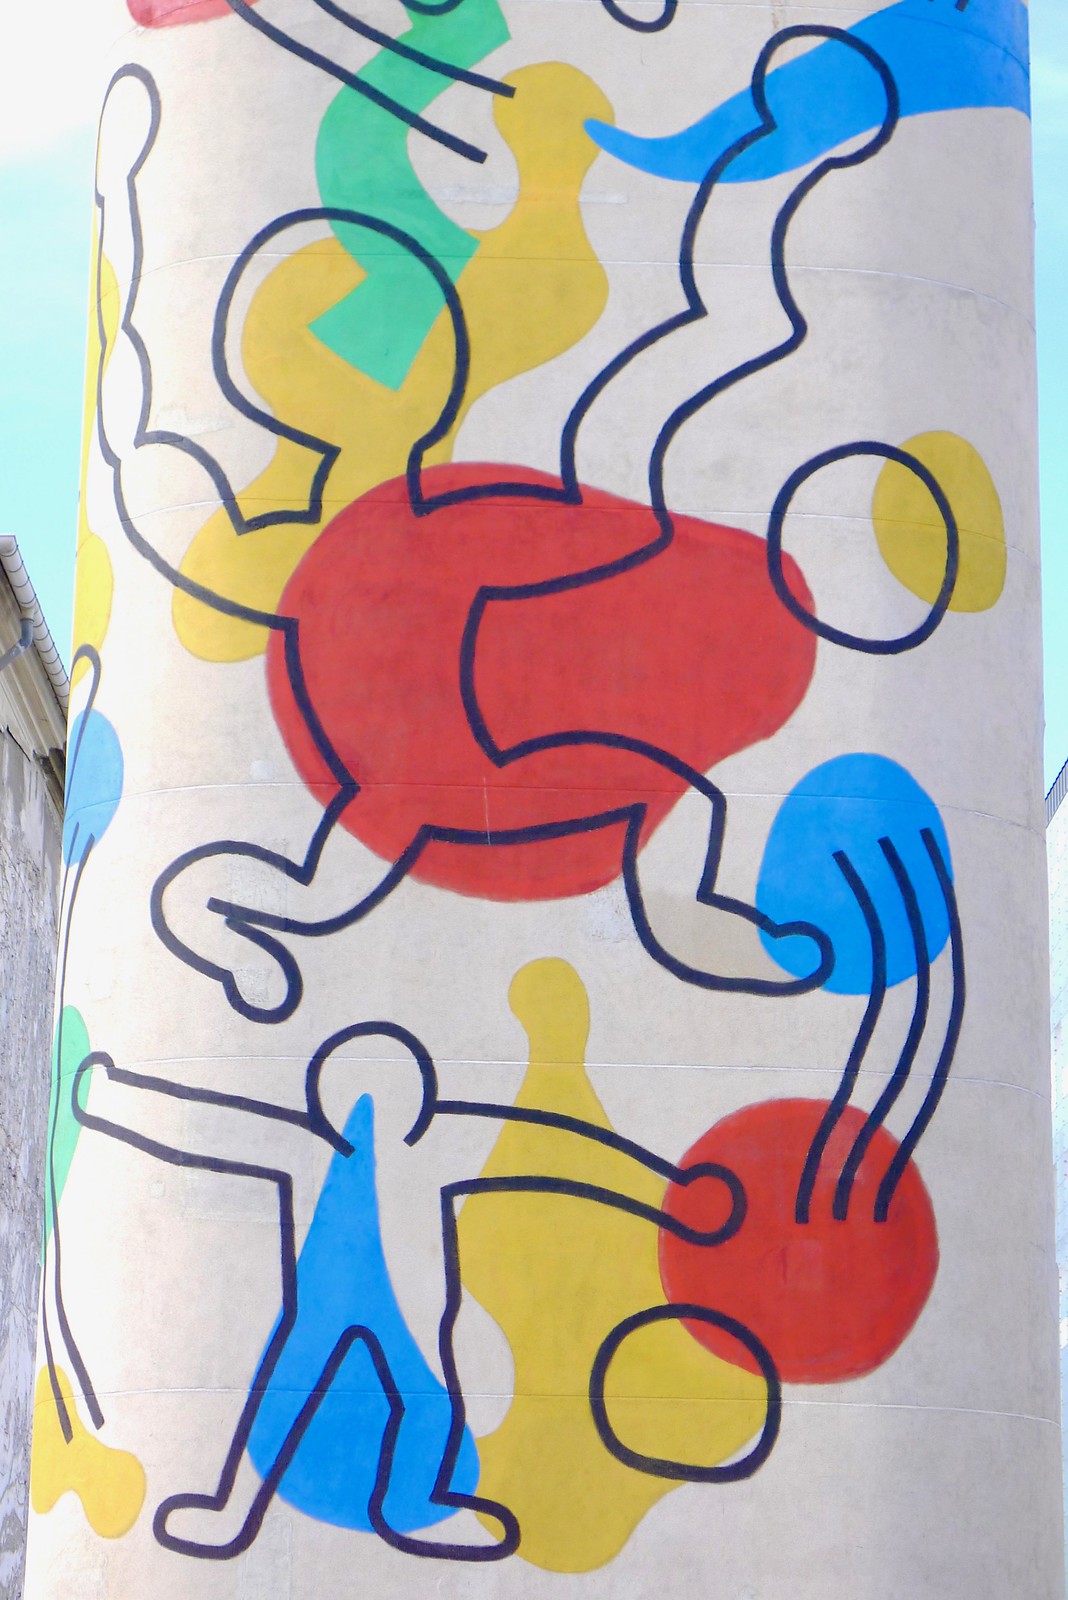 Keith Haring, Paris